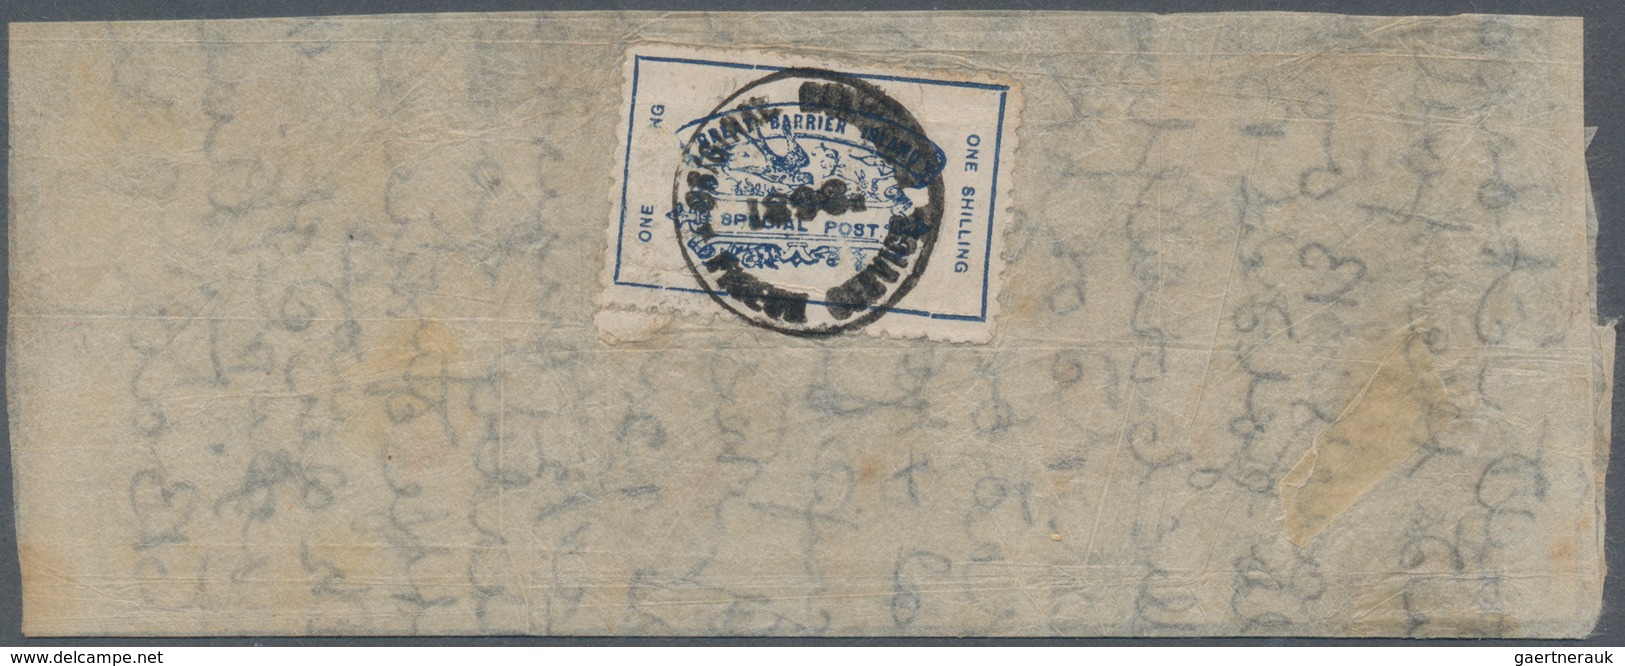 Brieftaubenpost: 1899/1904, NEW ZEALAND "THE GREAT BARRIER ISLAND PIGEON MAIL", extraordinary and de